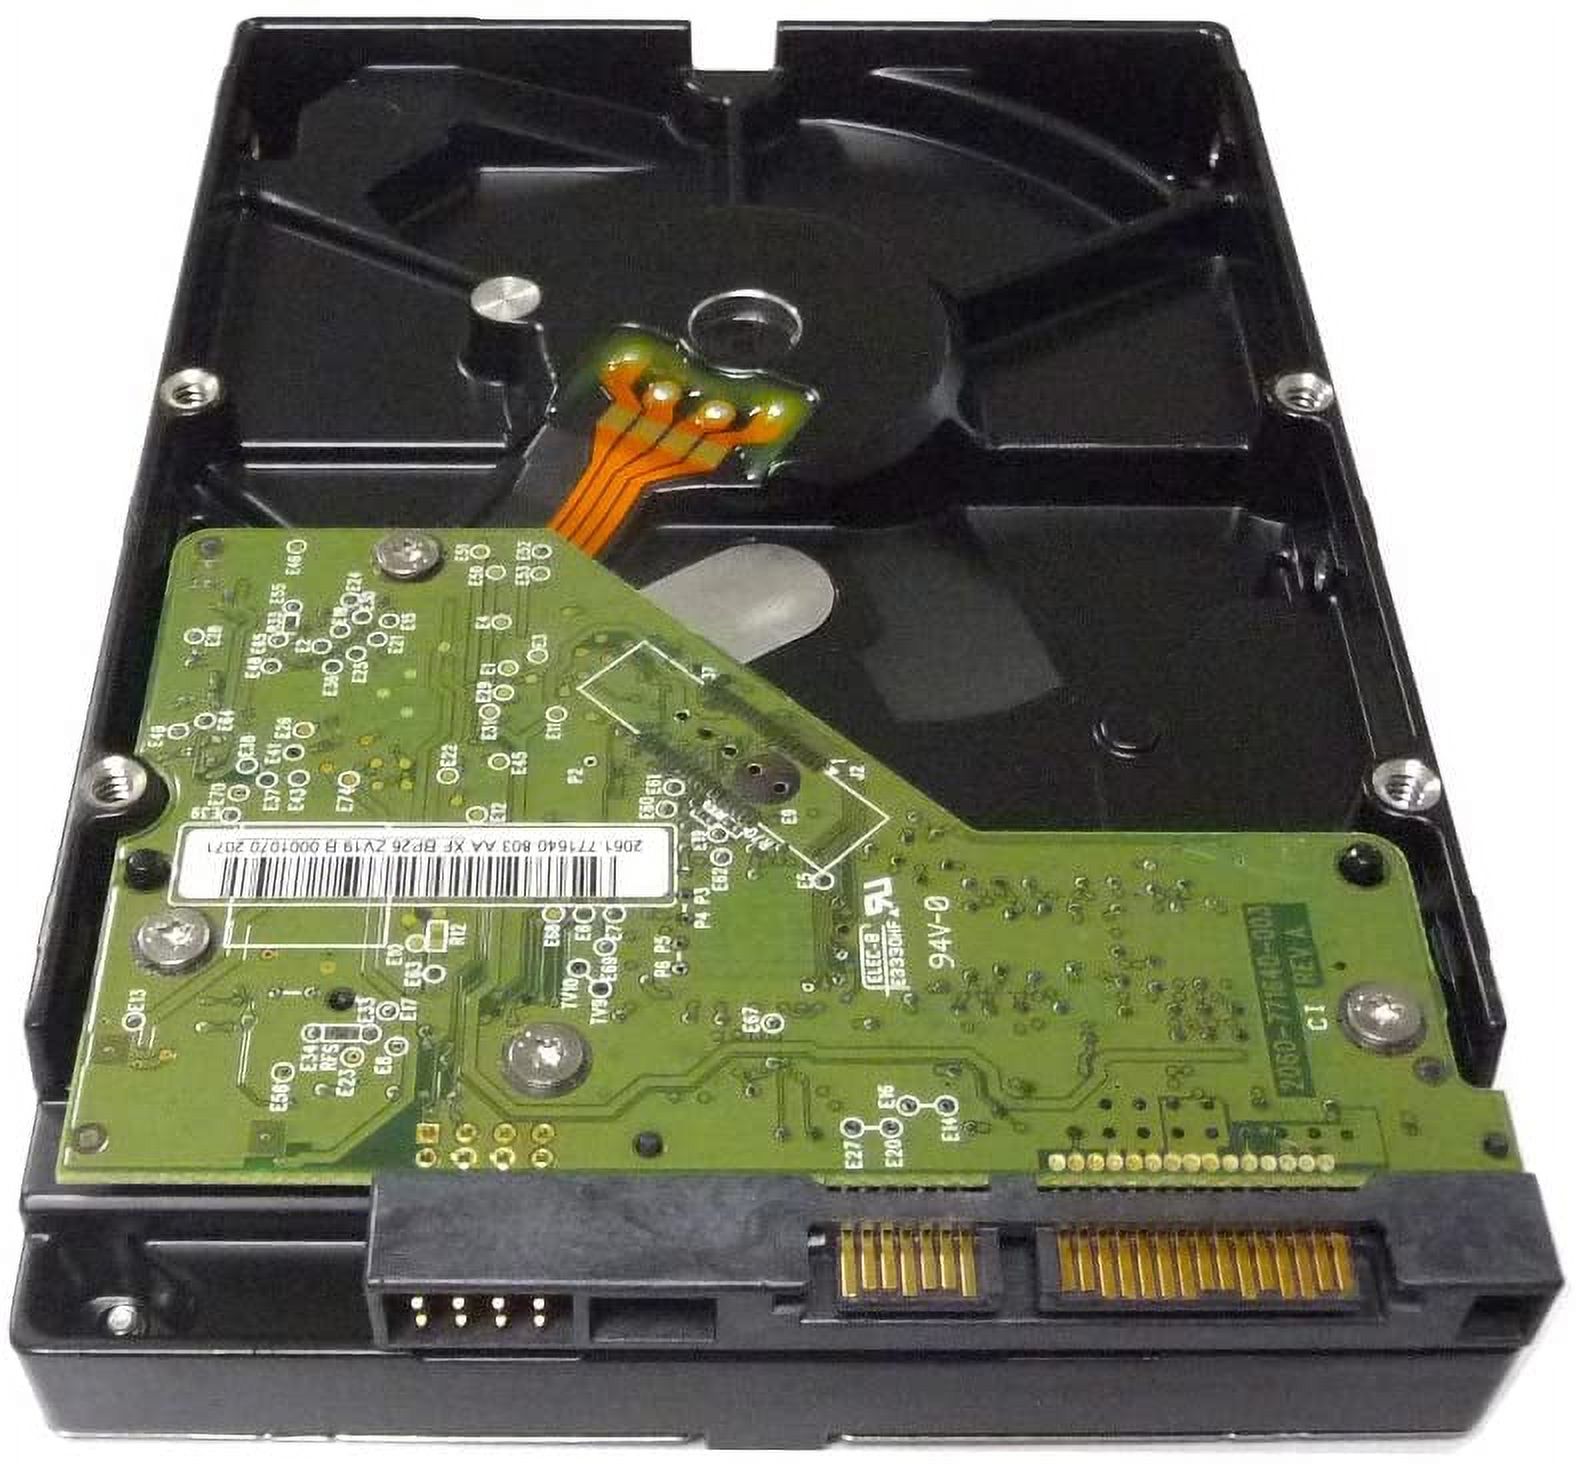 WD Western Digital AV-GP 500GB 32MB Cache SATA 3.0Gb/s 3.5inch (CCTV DVR, PC) Internal Hard Drive (Low power, Quiet) - image 4 of 5